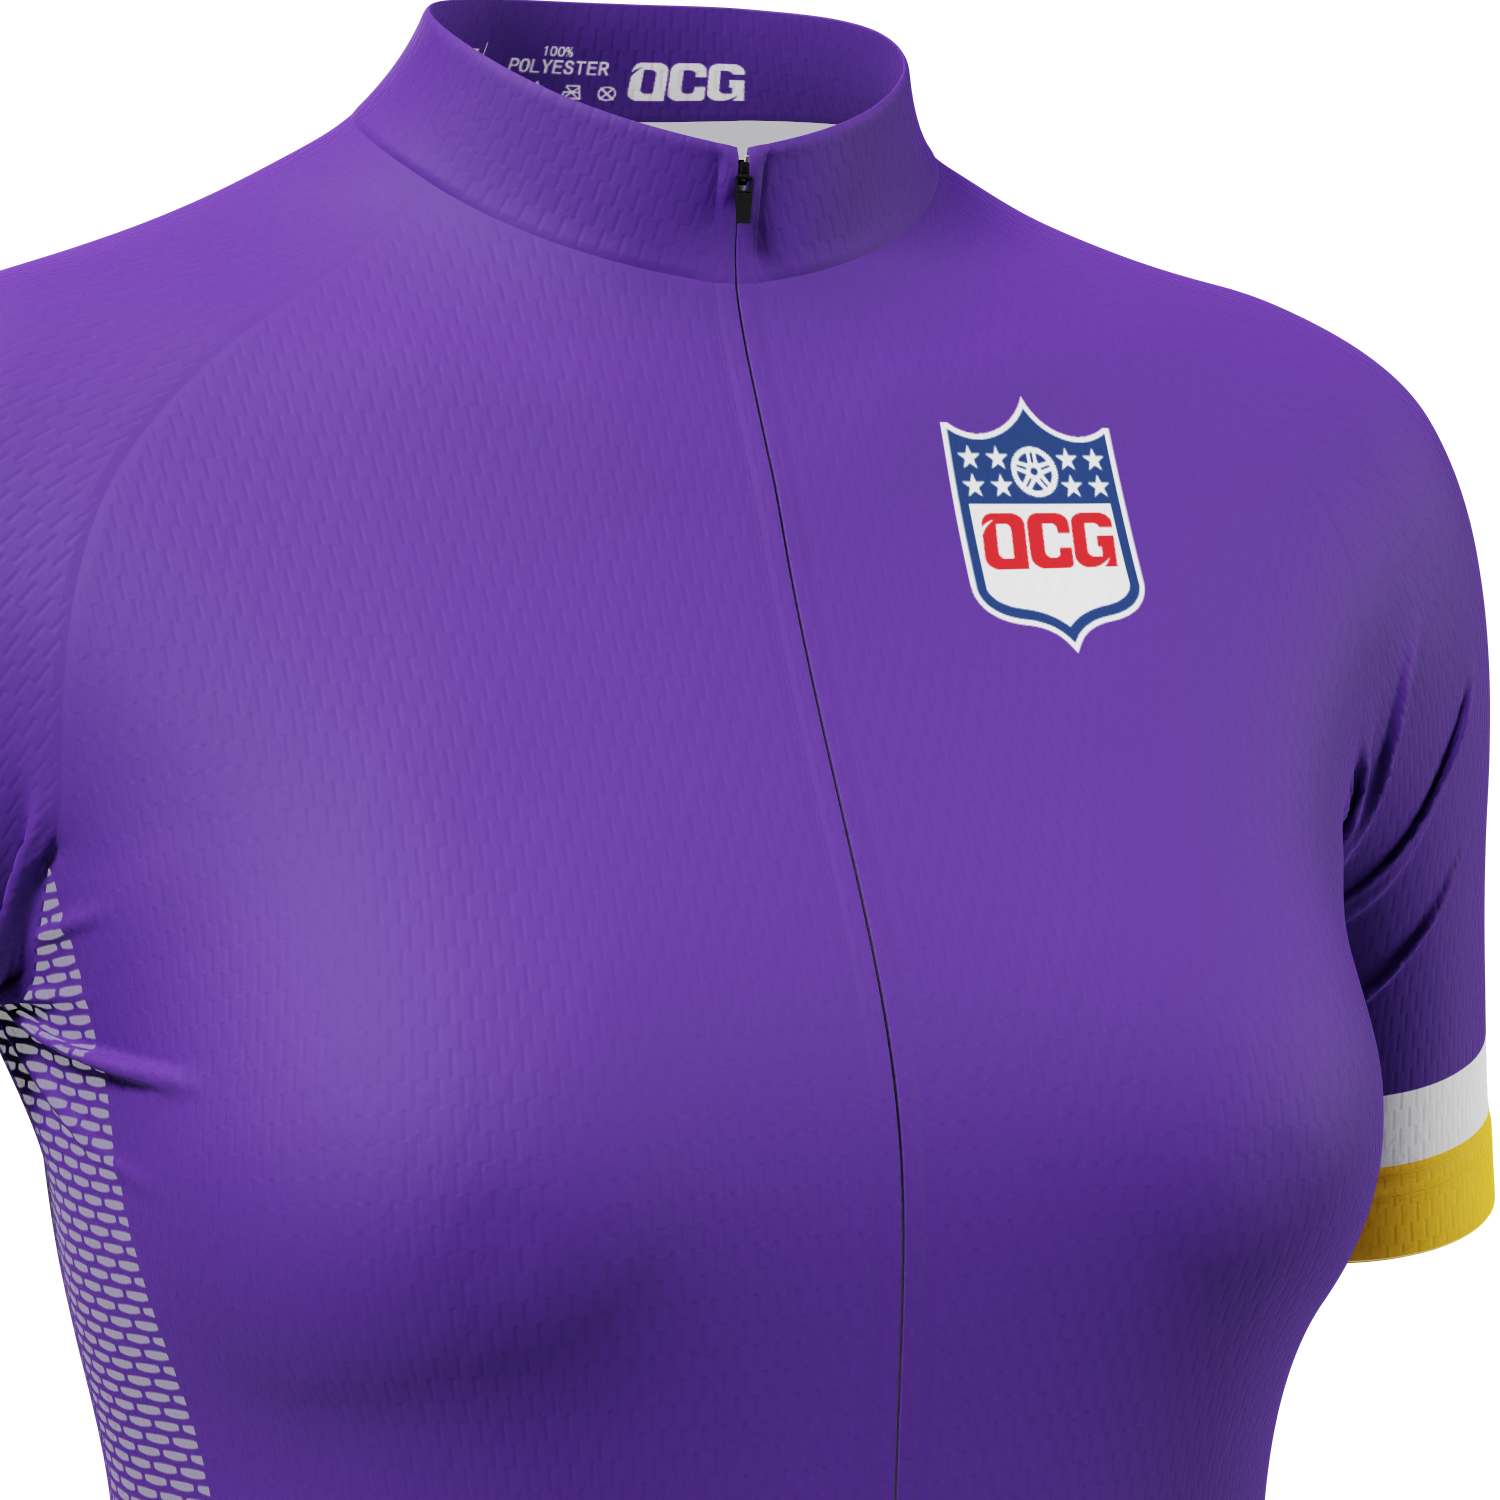 Women's Minnesota Football Short Sleeve Cycling Jersey